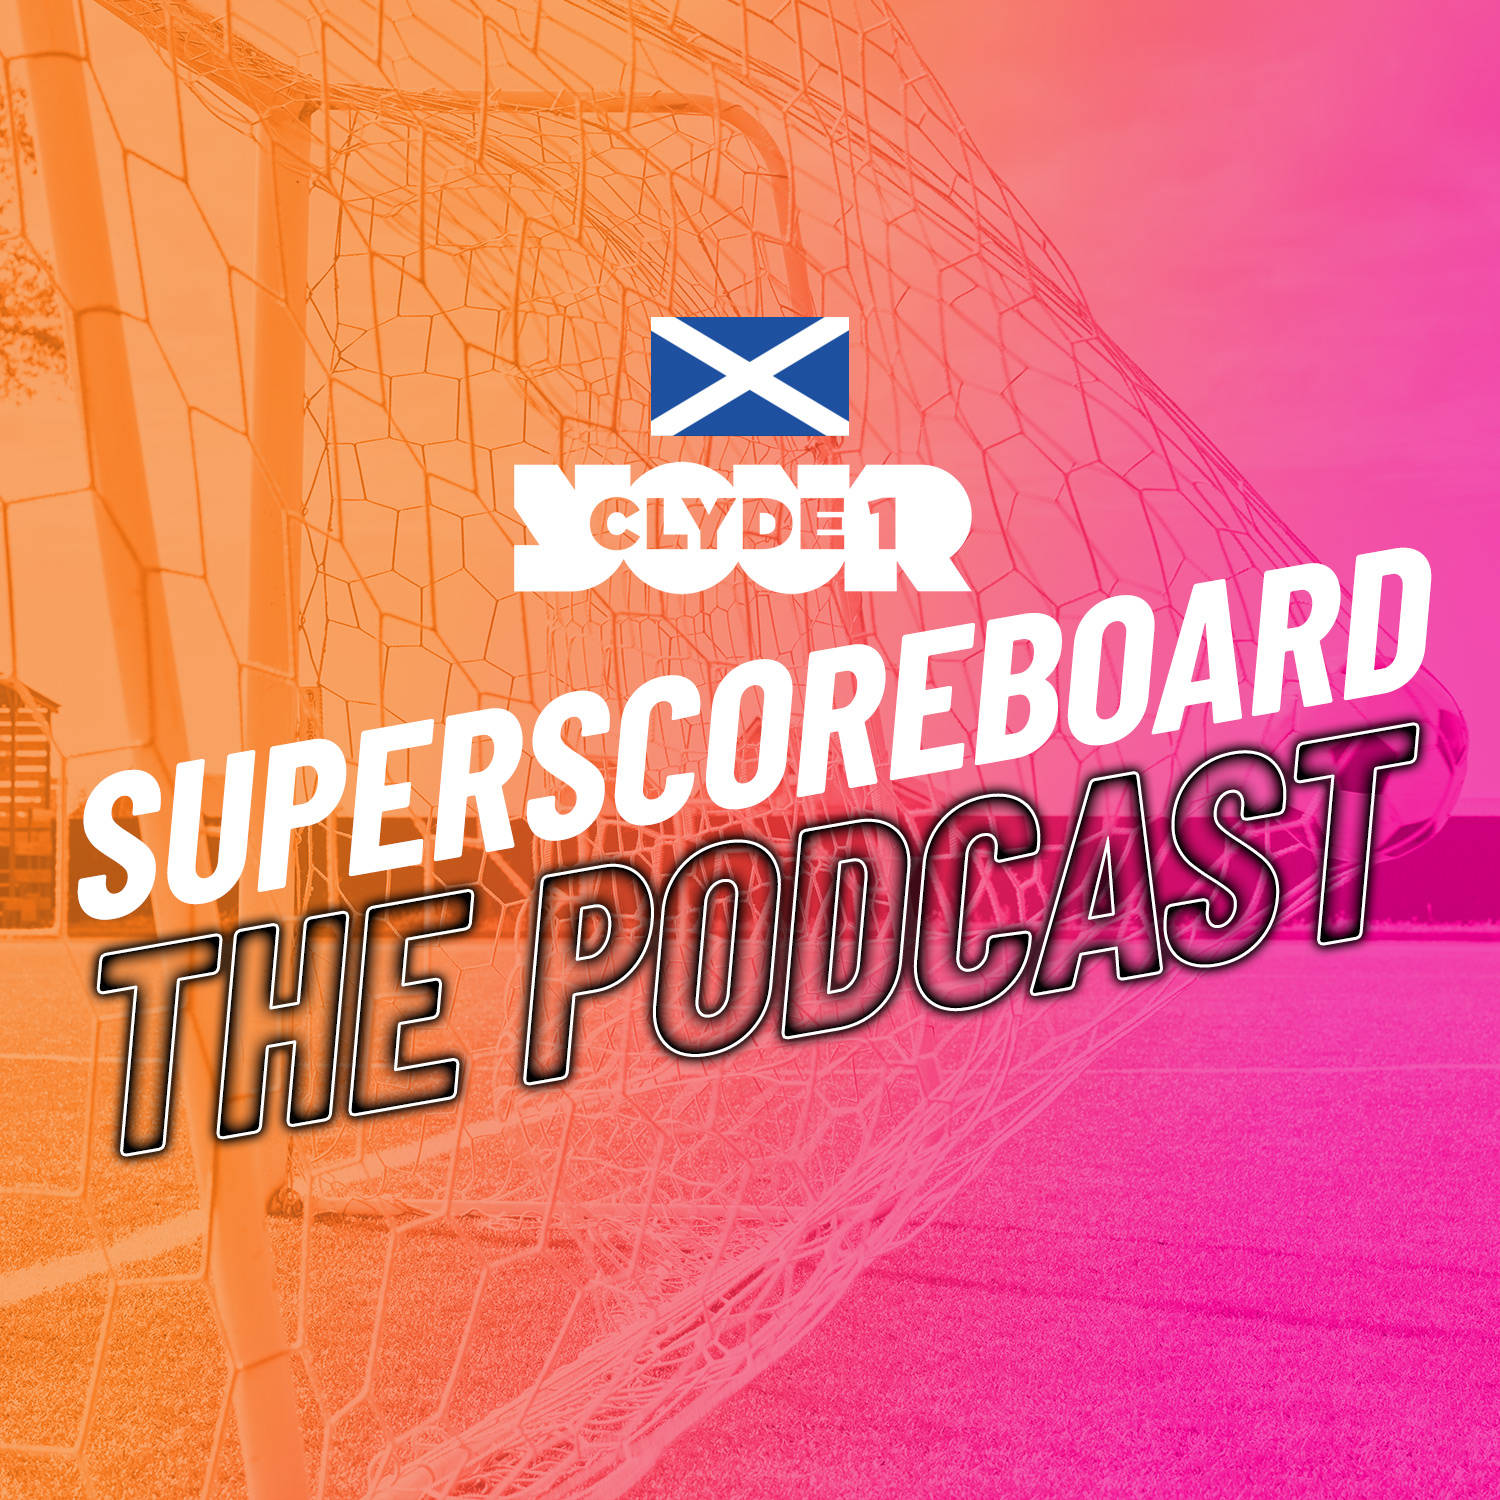 Sunday 21st April Clyde 1 Superscoreboard – Part 1